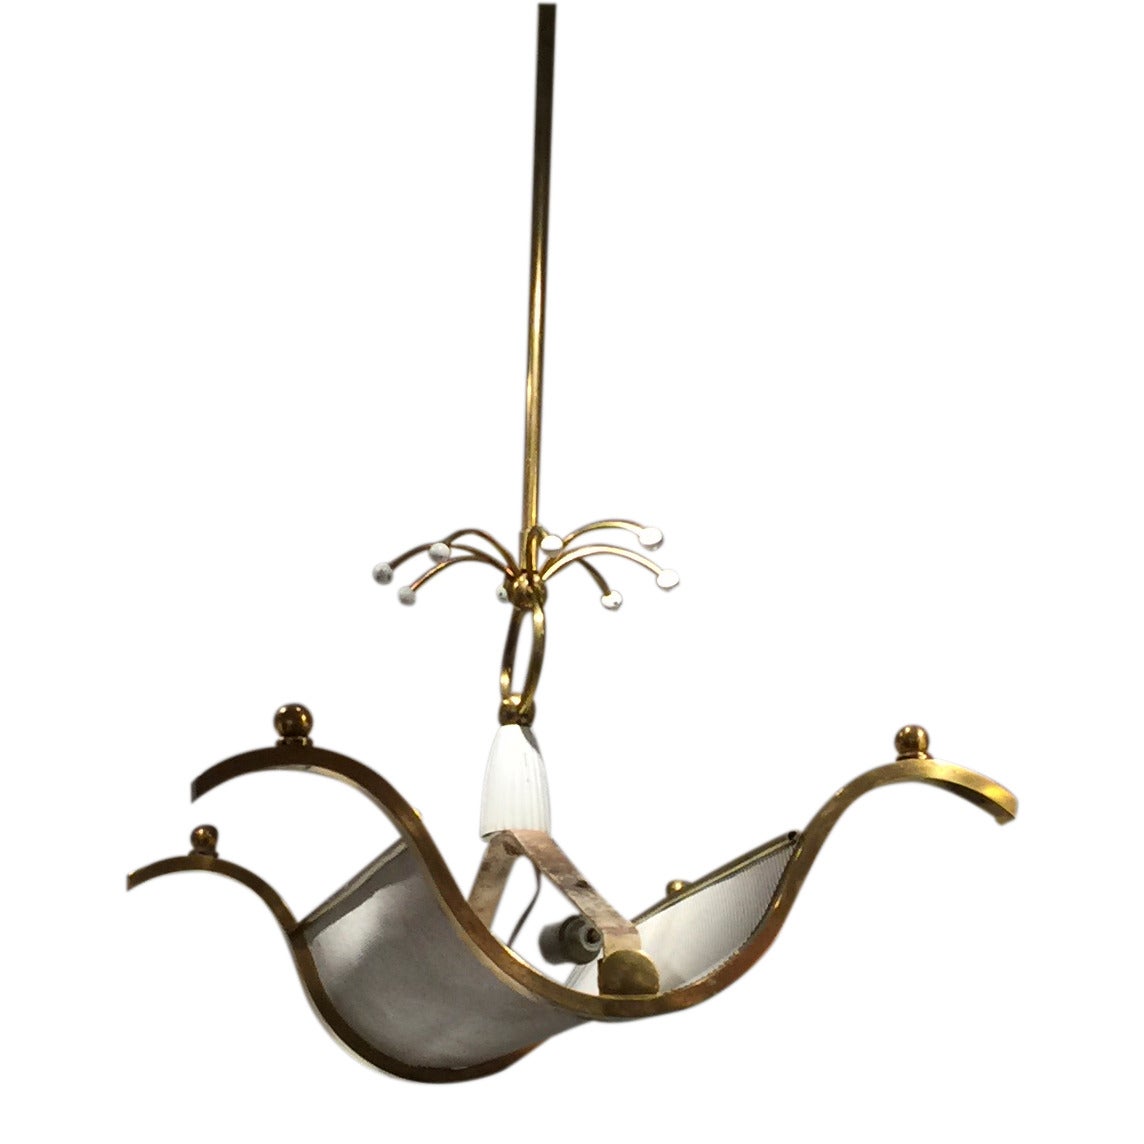 Brass Modernist Chandelier by Maison Arlus, France 1950s